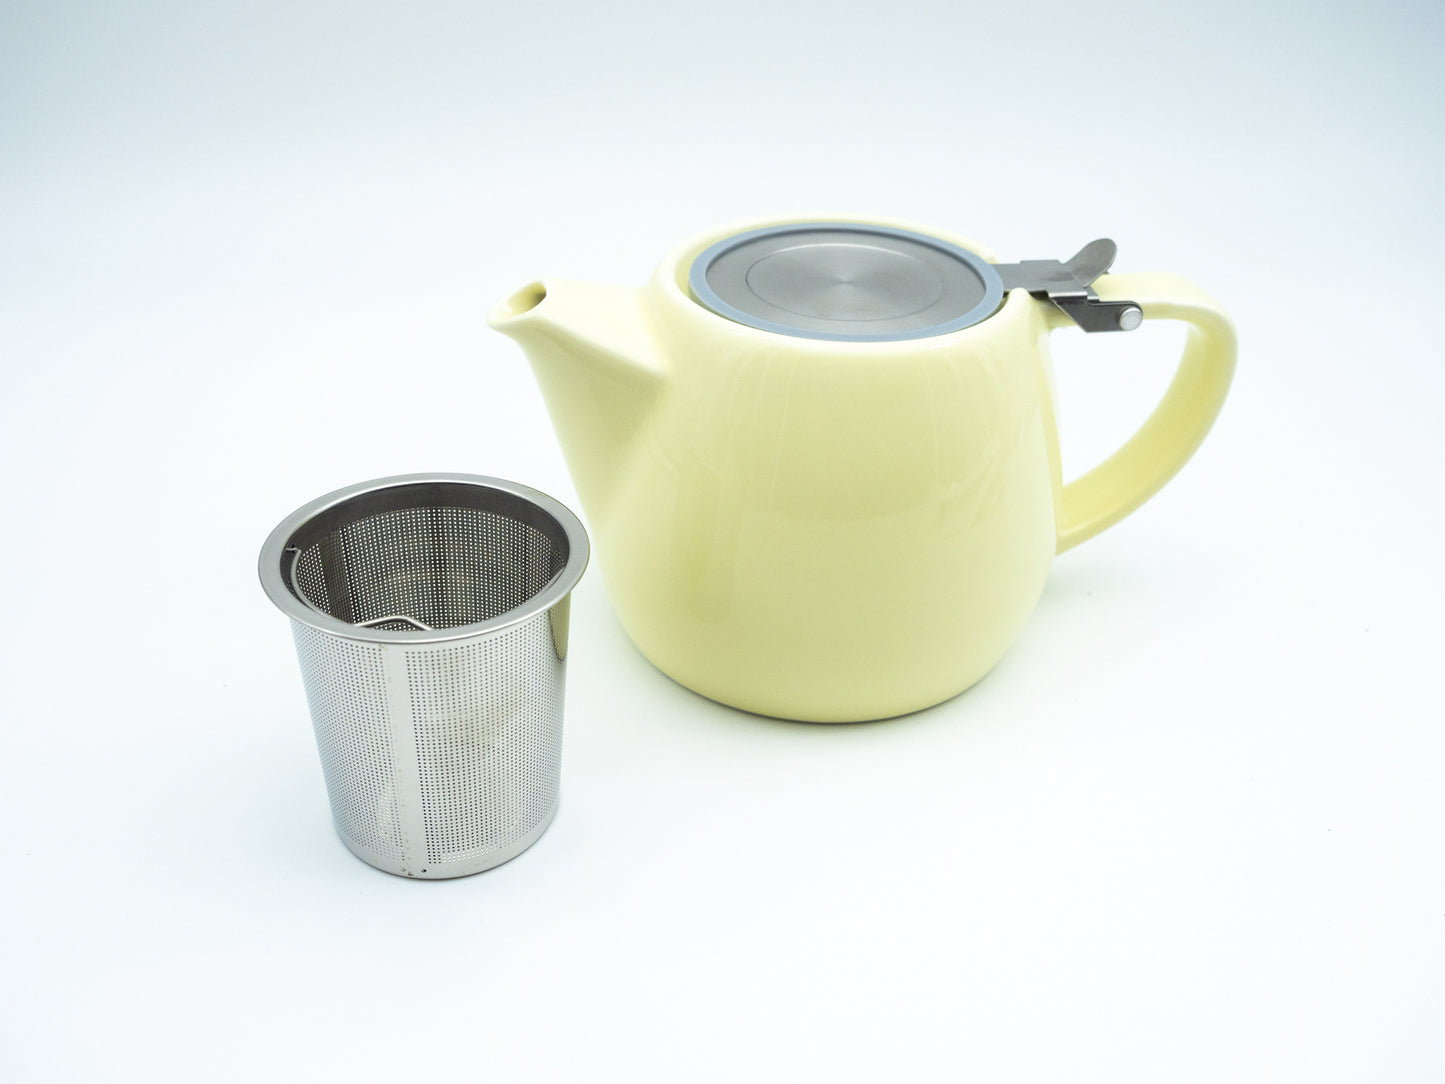 Vanilla porcelain tea pot next to a stainless steel infuser basket